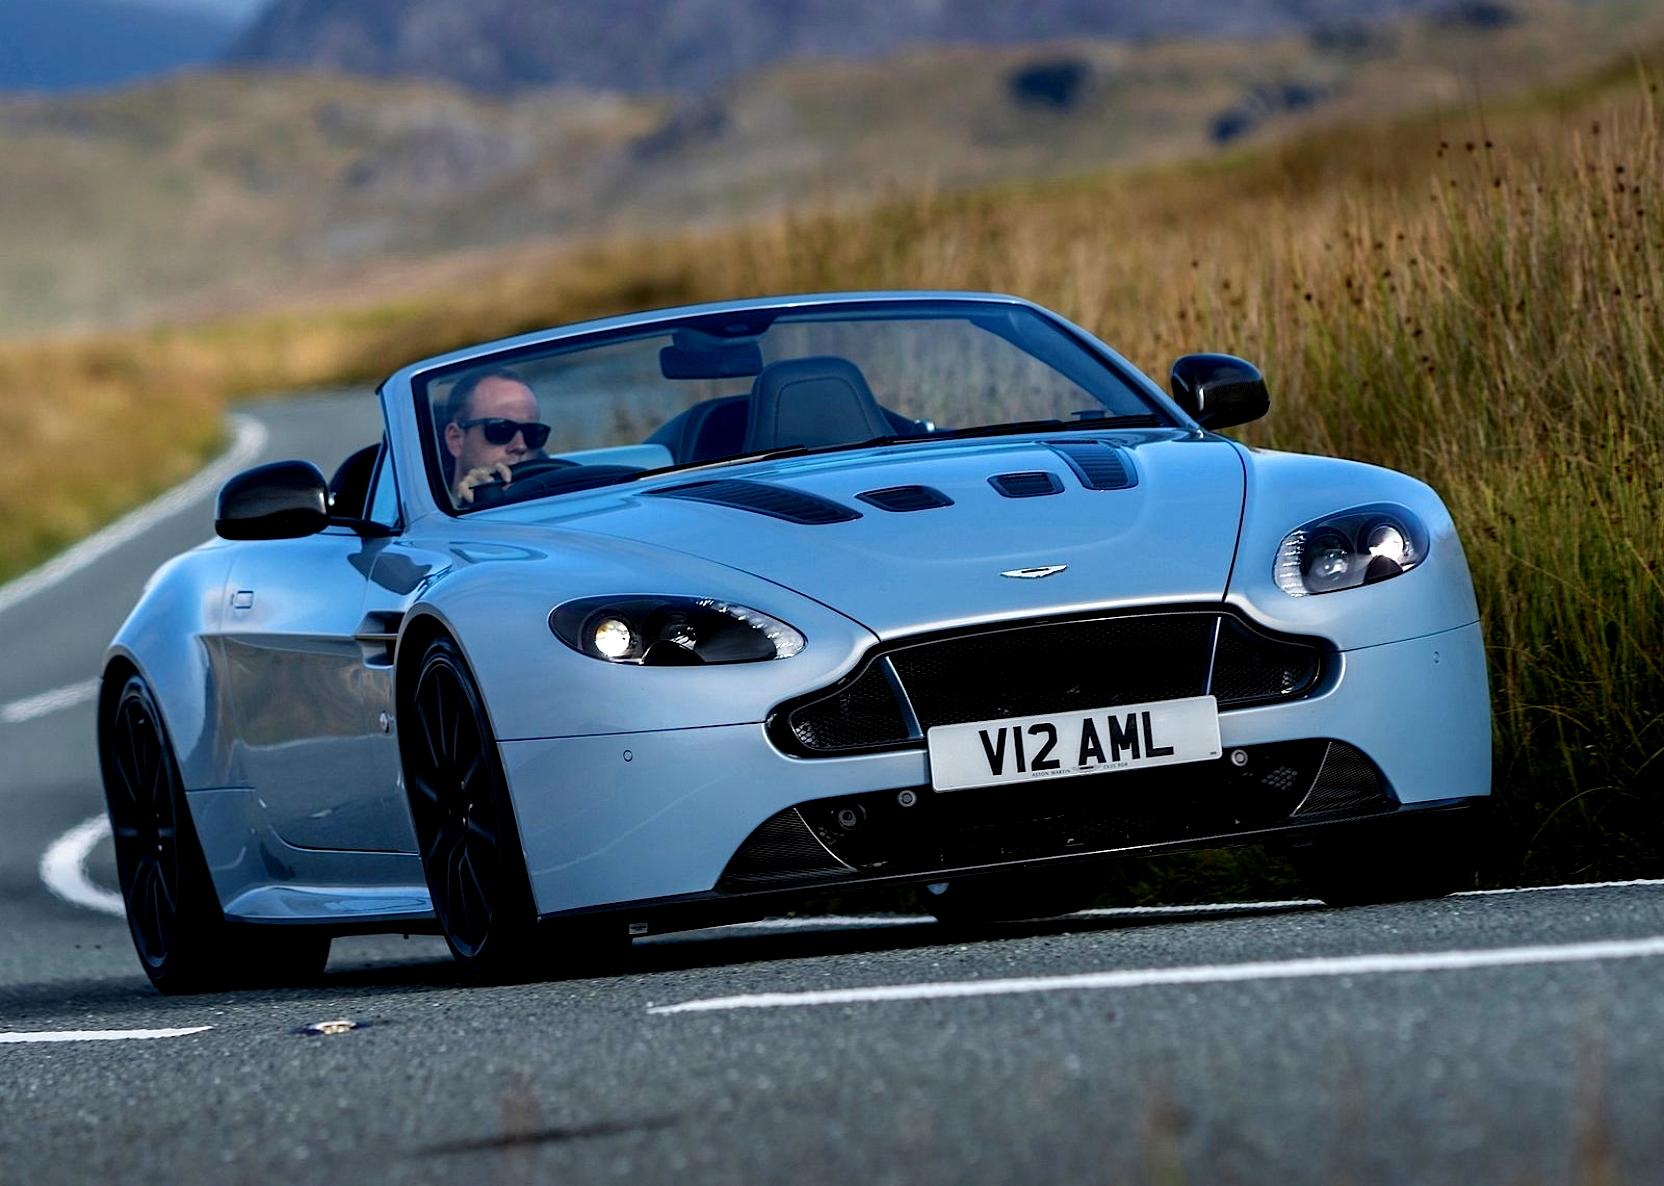 Aston Martin V12 Vantage S Roadster 2014 #56